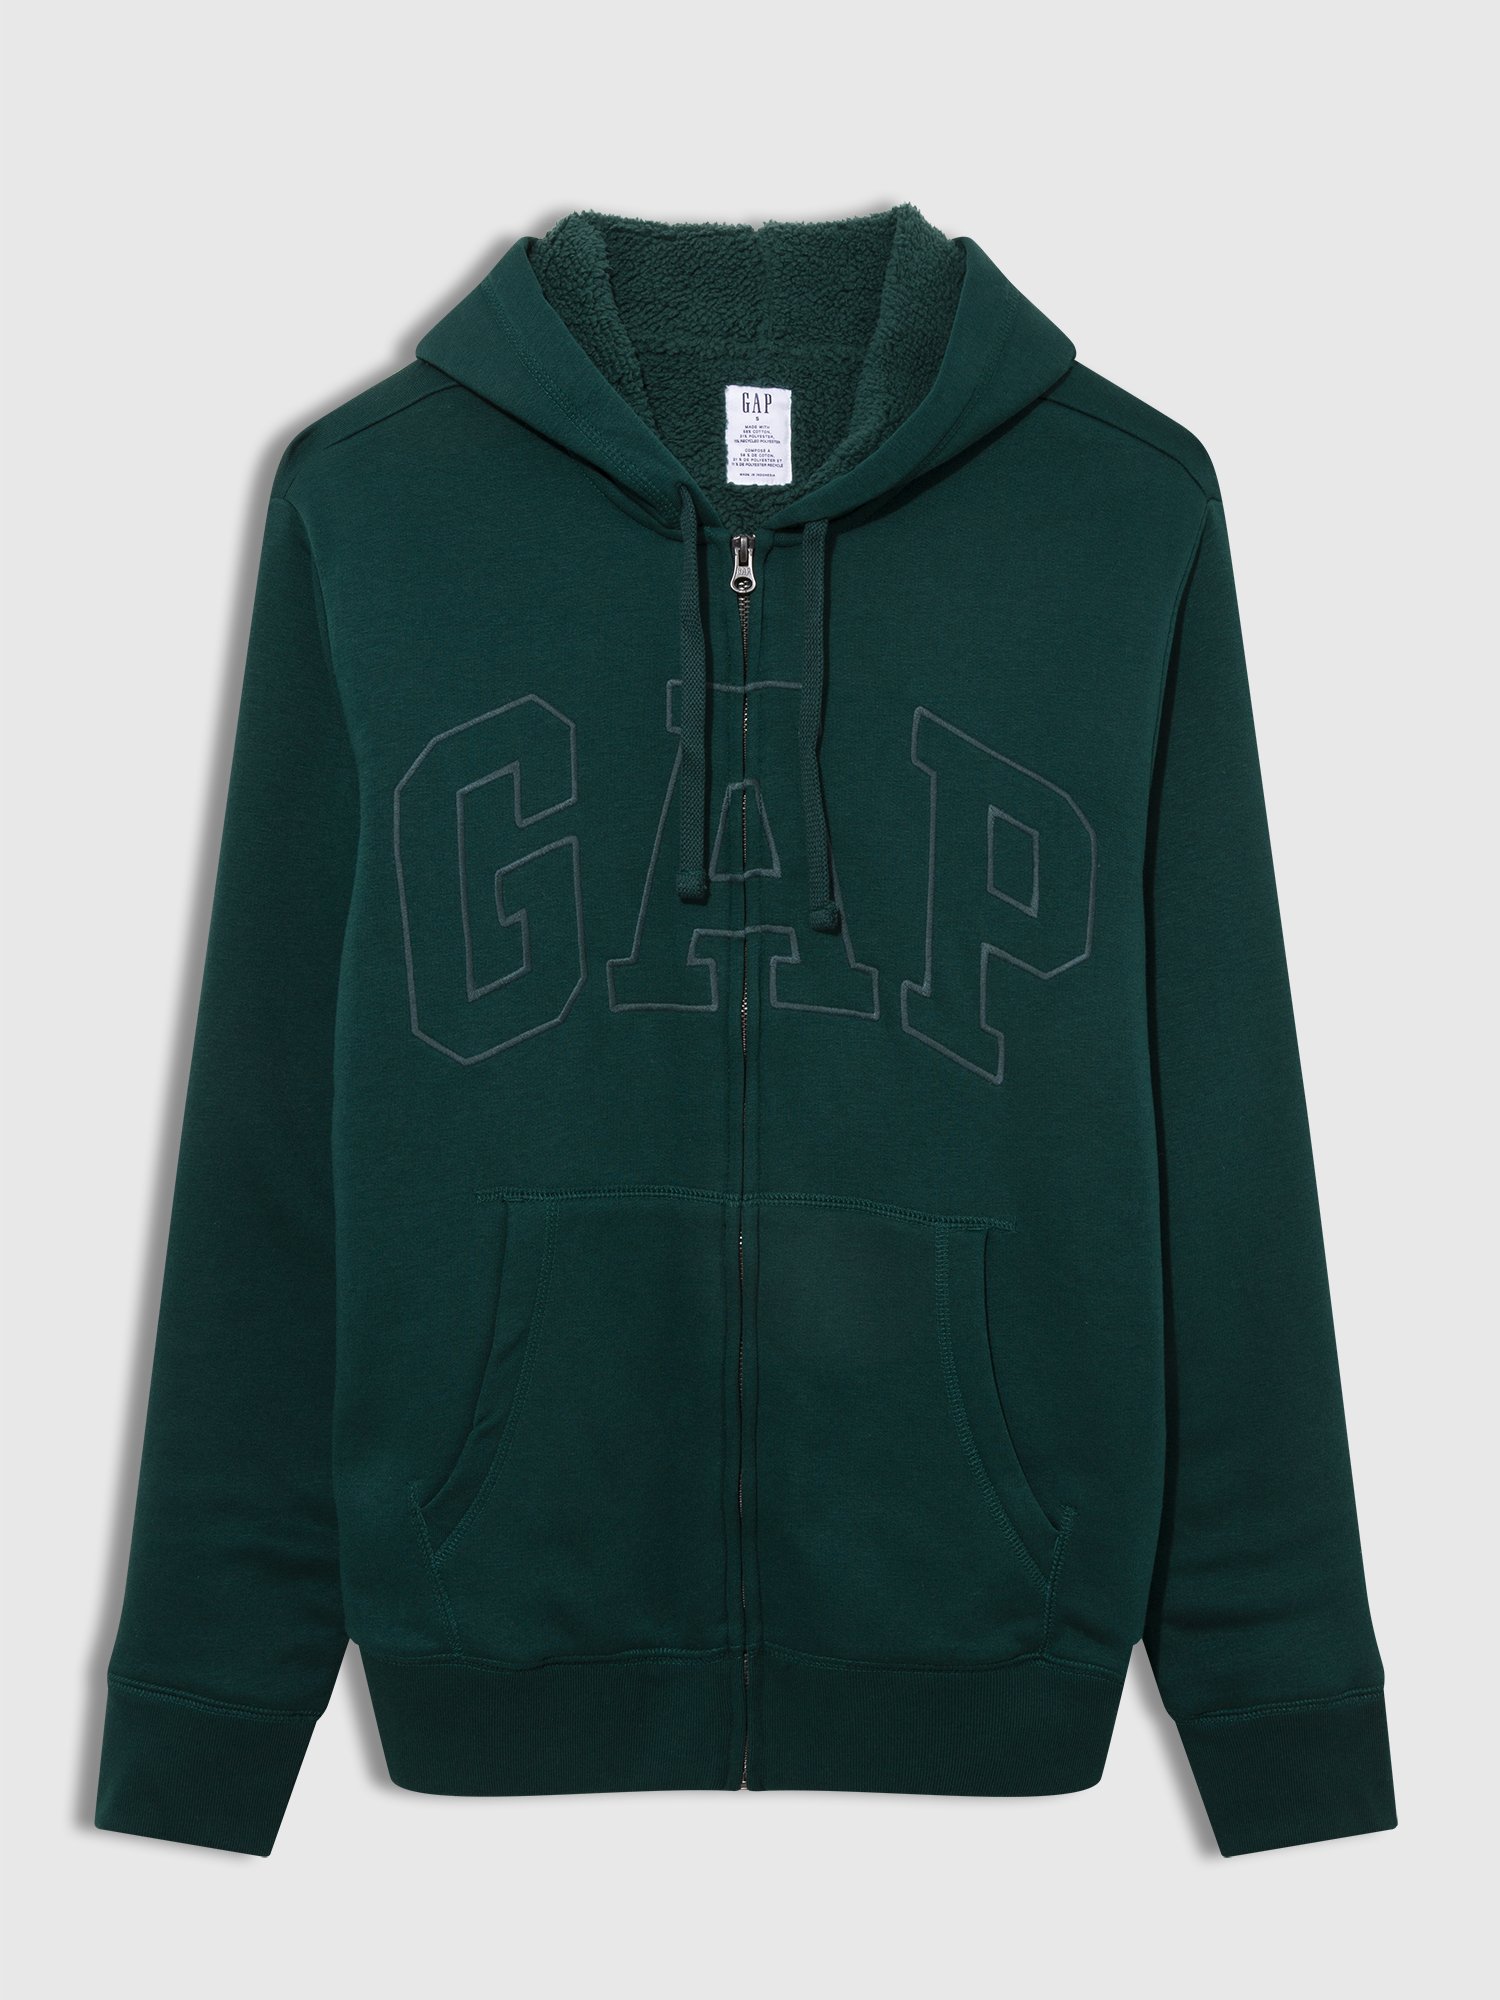 Gap Logo Sherpa Sweatshirt product image